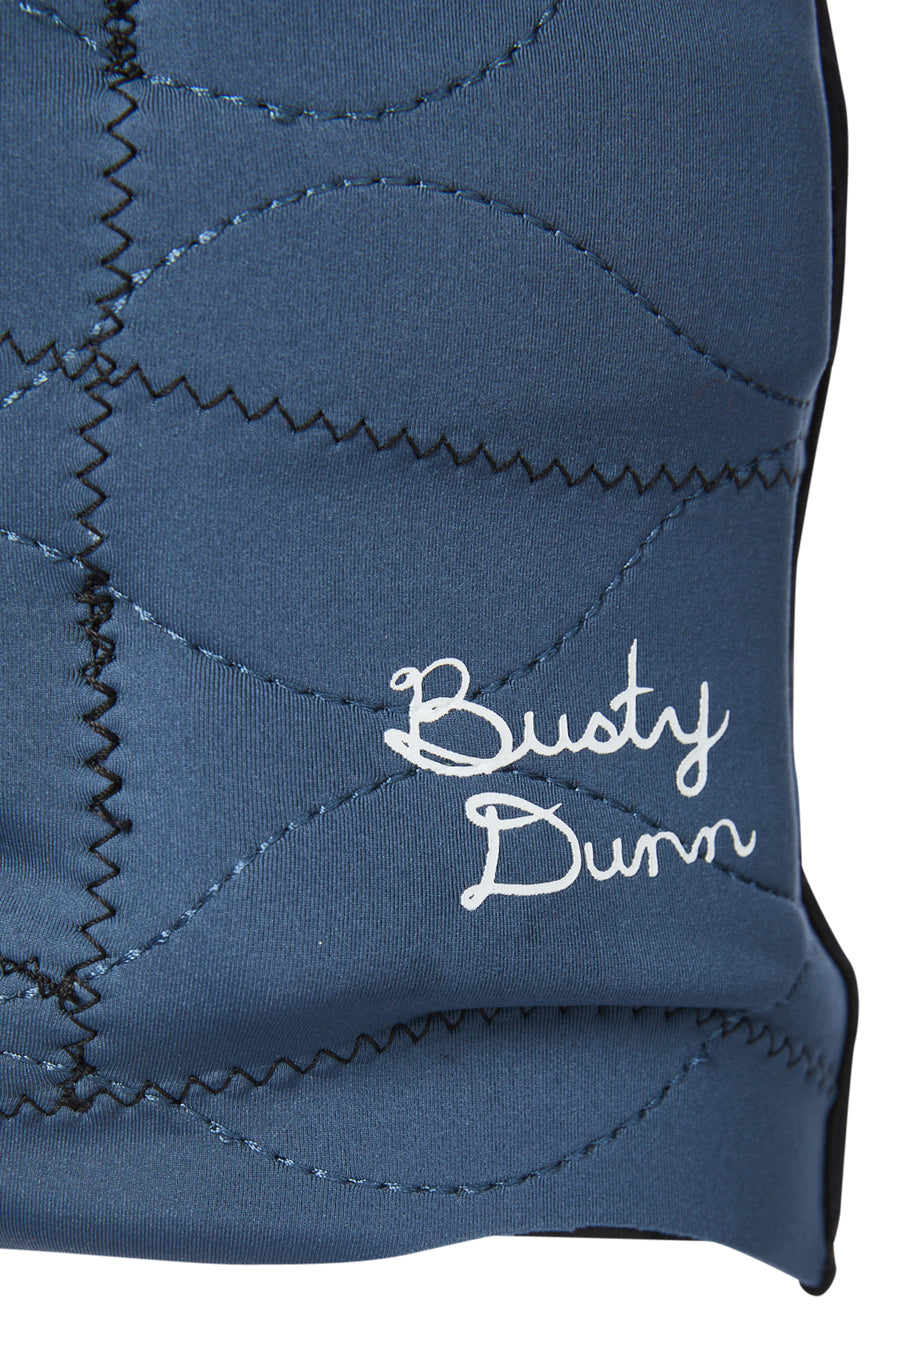 X1 F/E Mens Life Jacket - Busty Dunn Edition